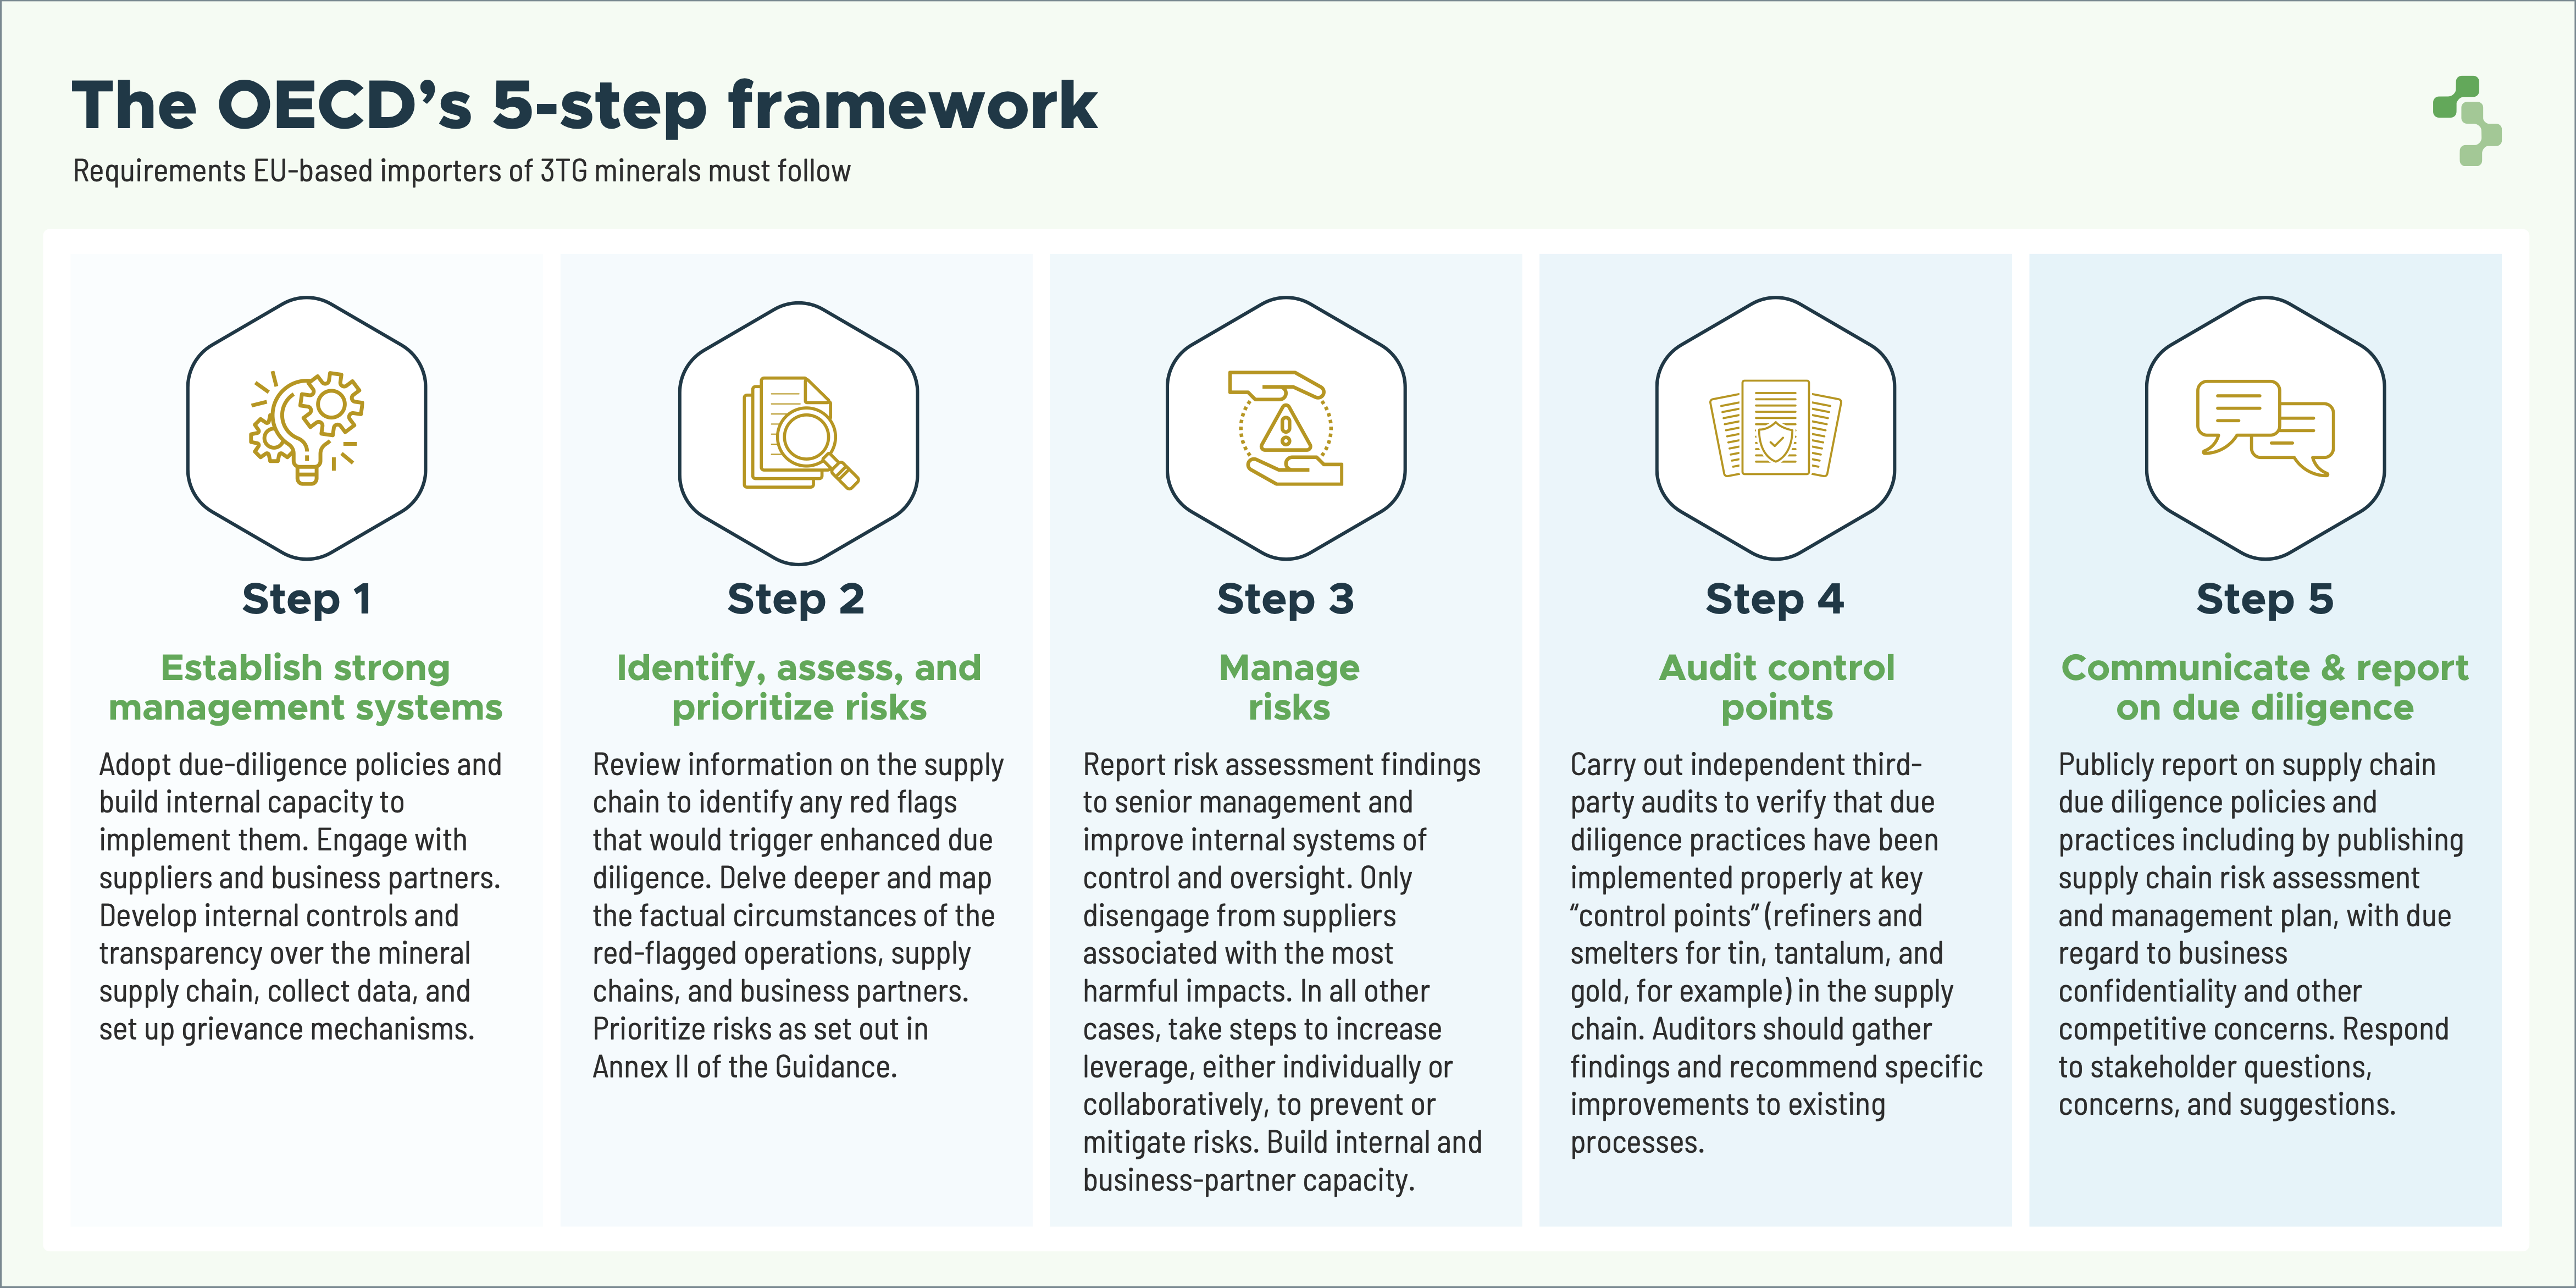 The OECD’s 5-step framework (1500 x 750 px)